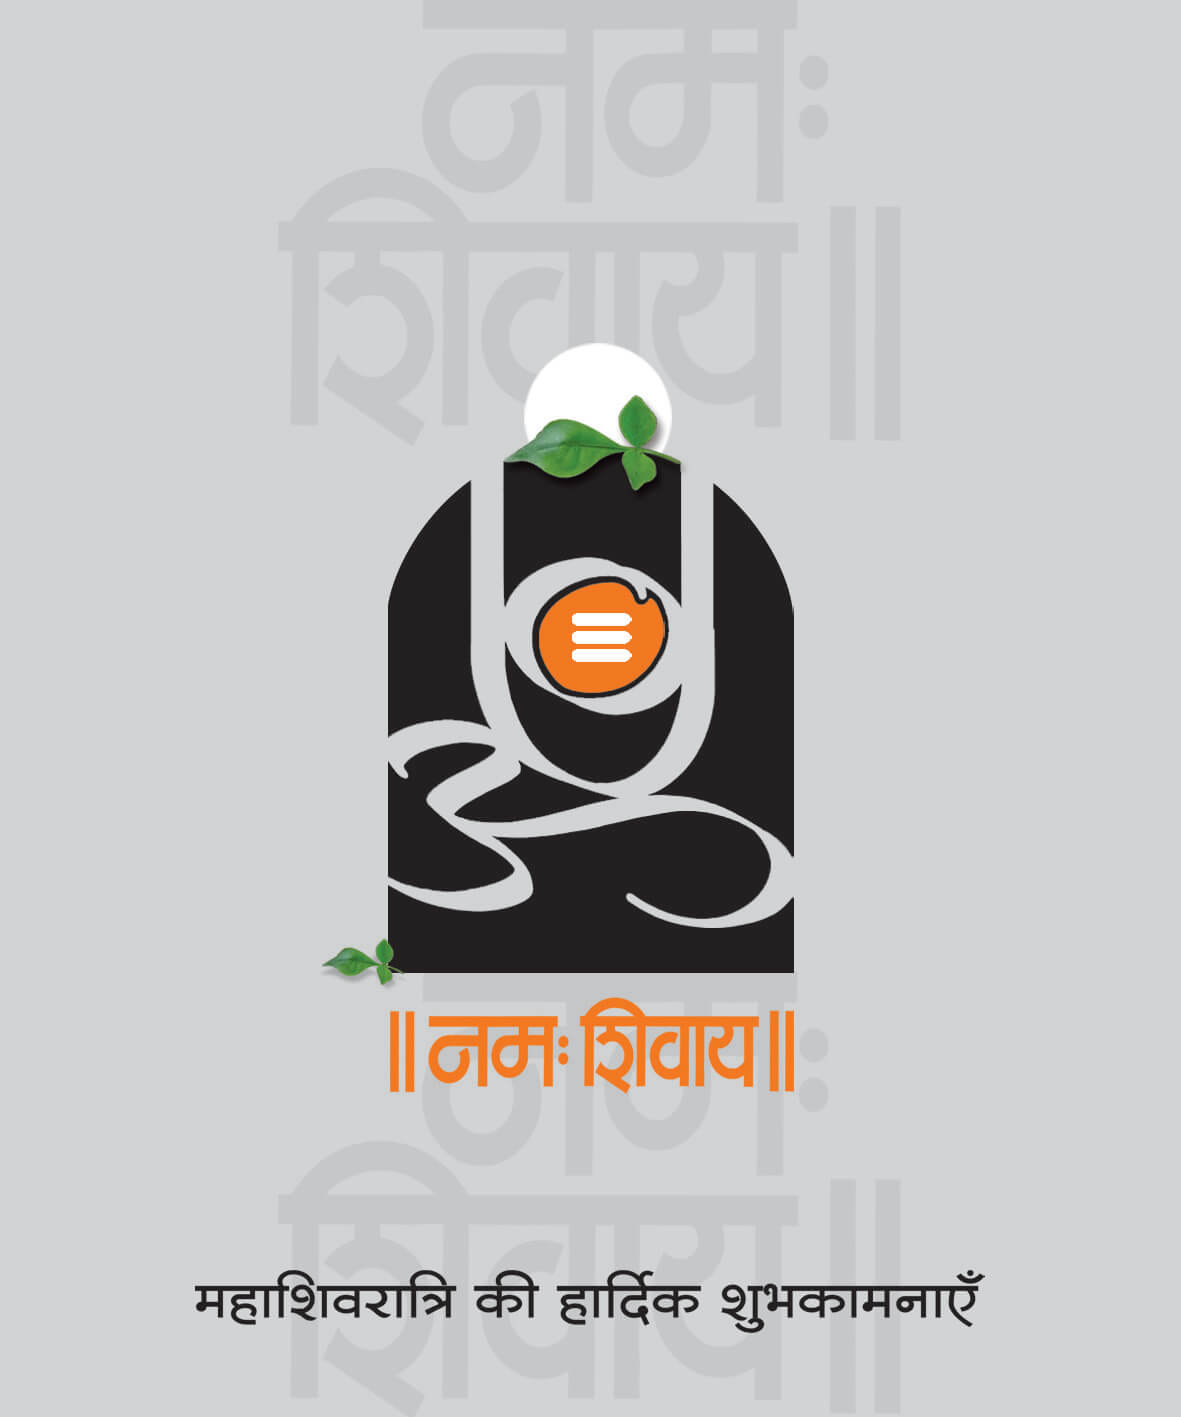 Maha Shivratri | eGreetings Portal